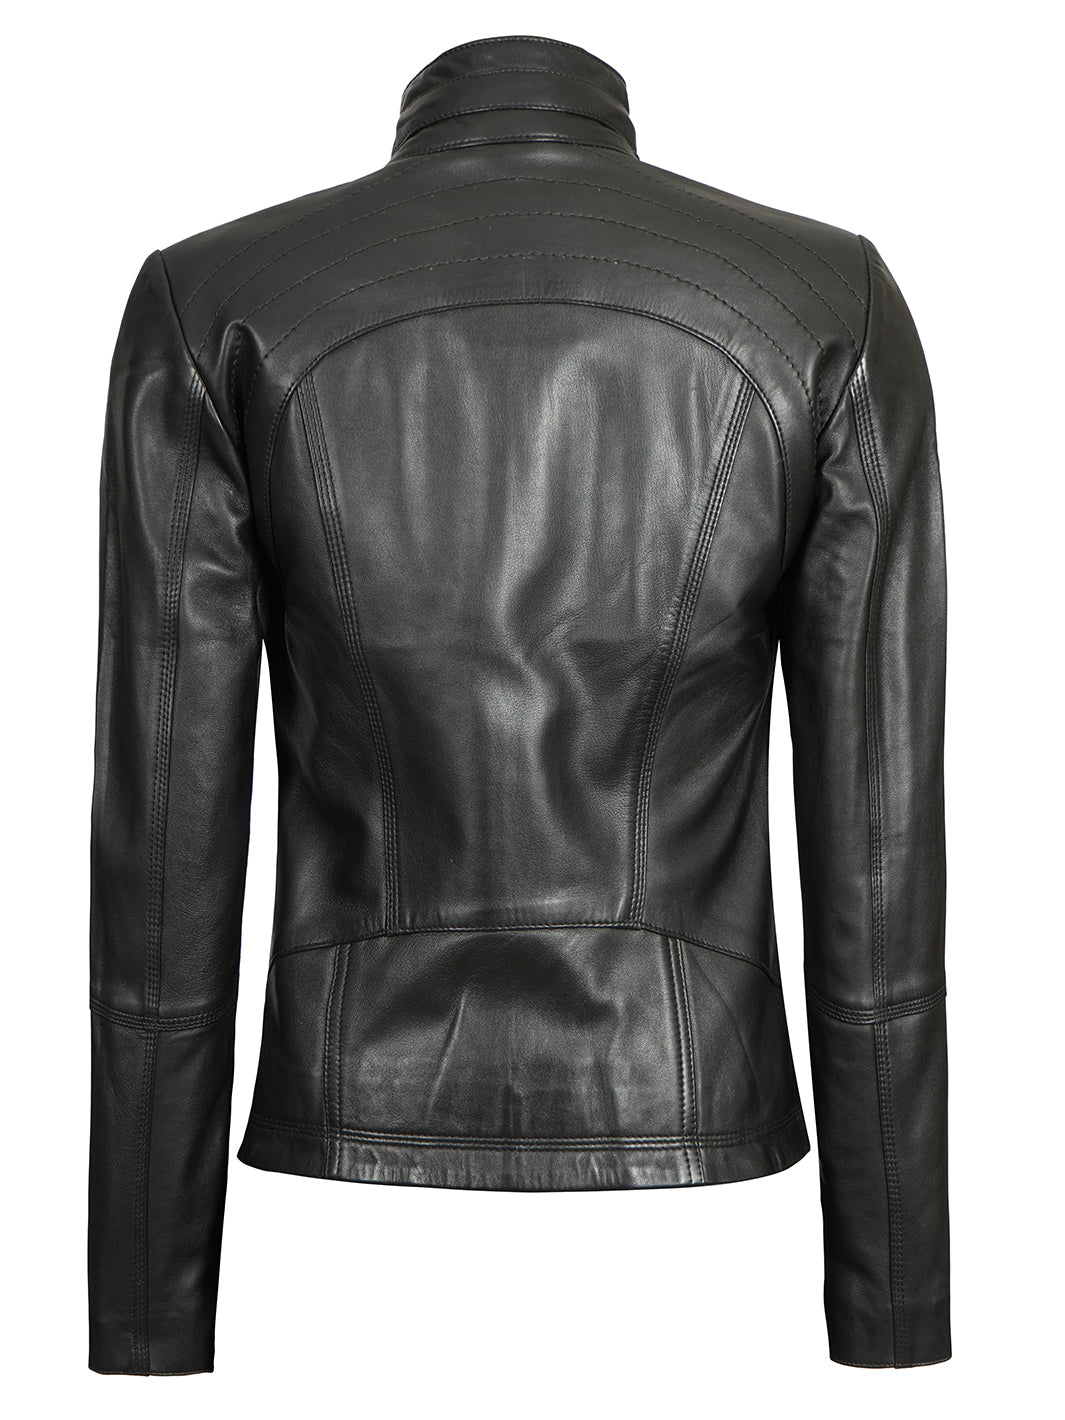 Womens black motorcycle leather jacket